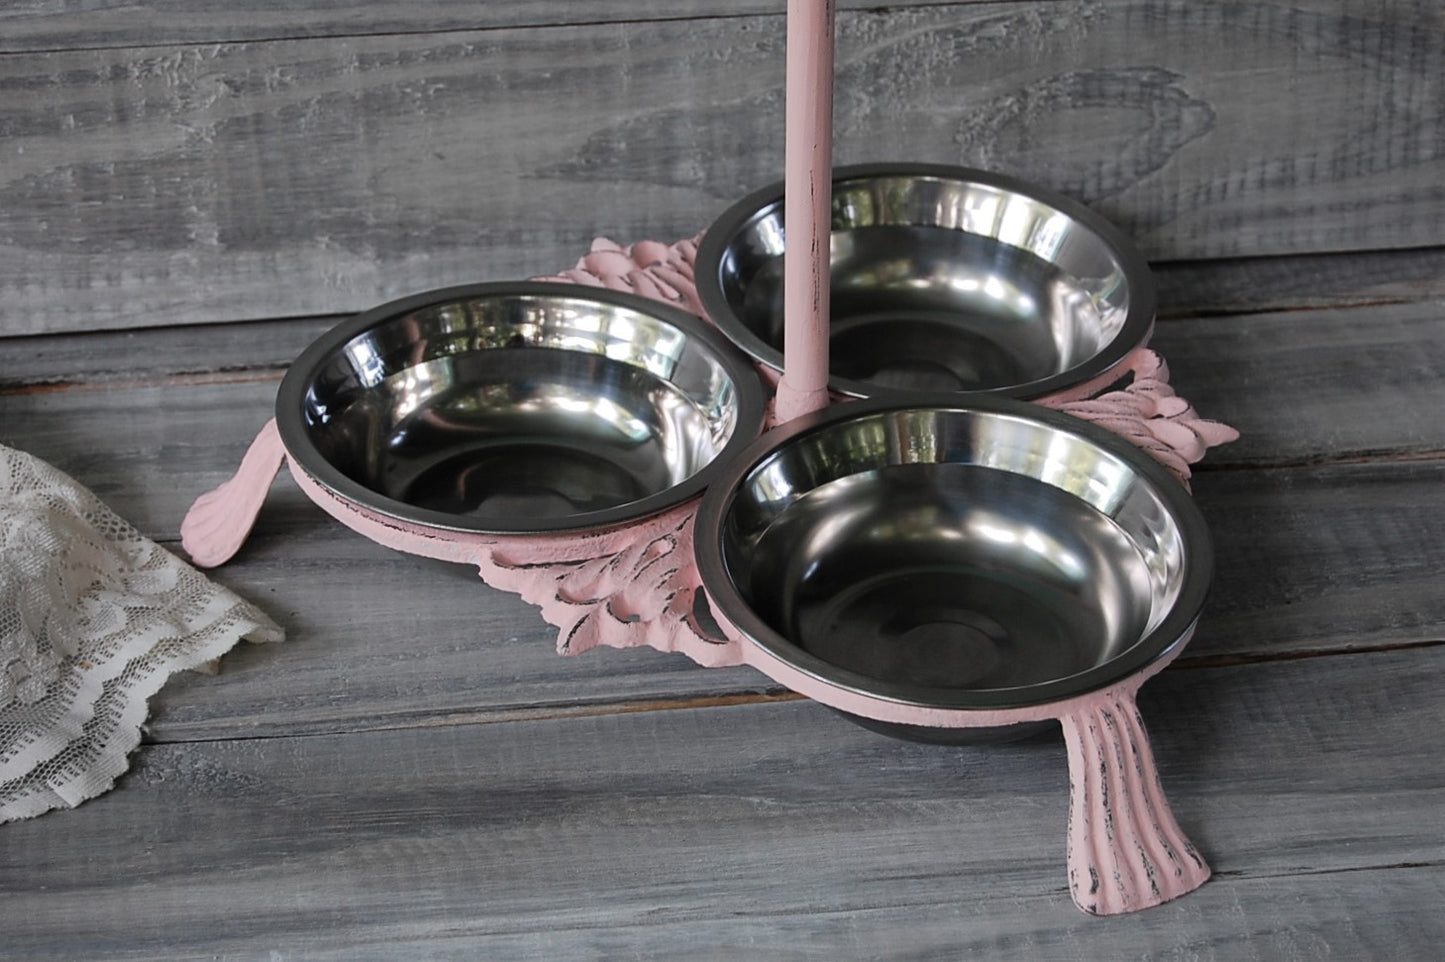 Pink pet bowls